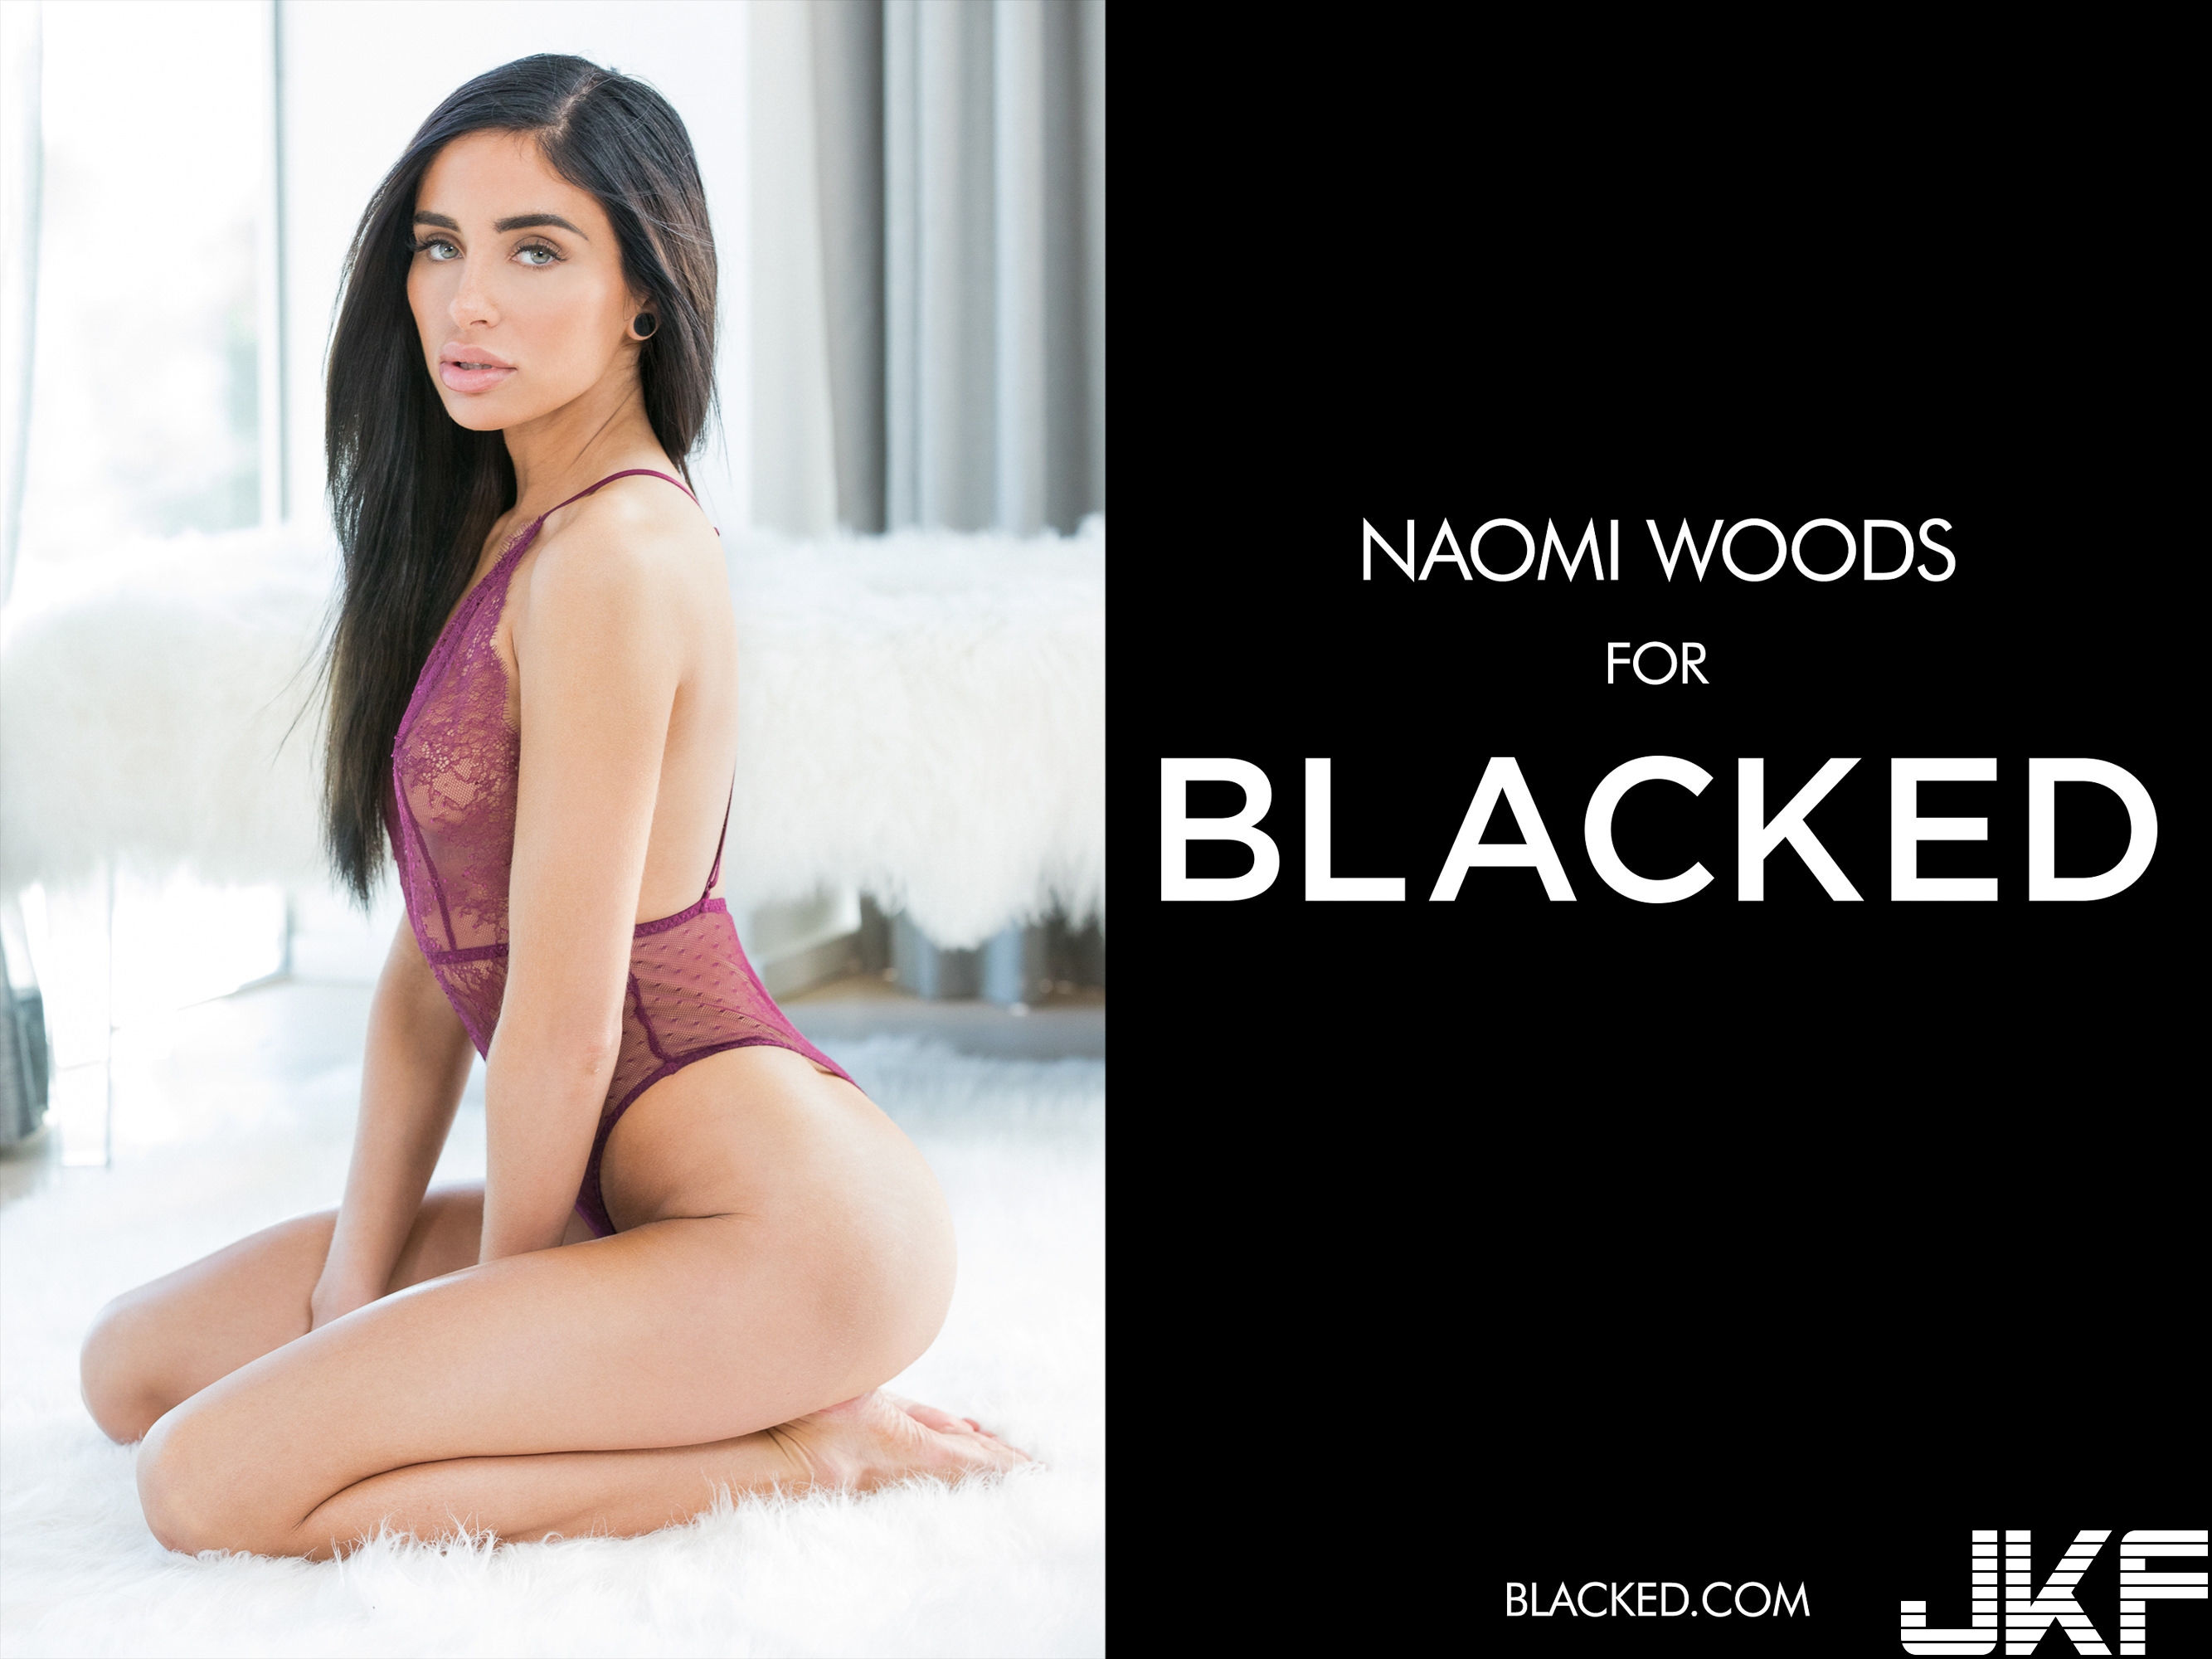 Blacked - Naomi Woods 男友同意女友出軌(圖) - 貼圖 - 歐美寫真 -